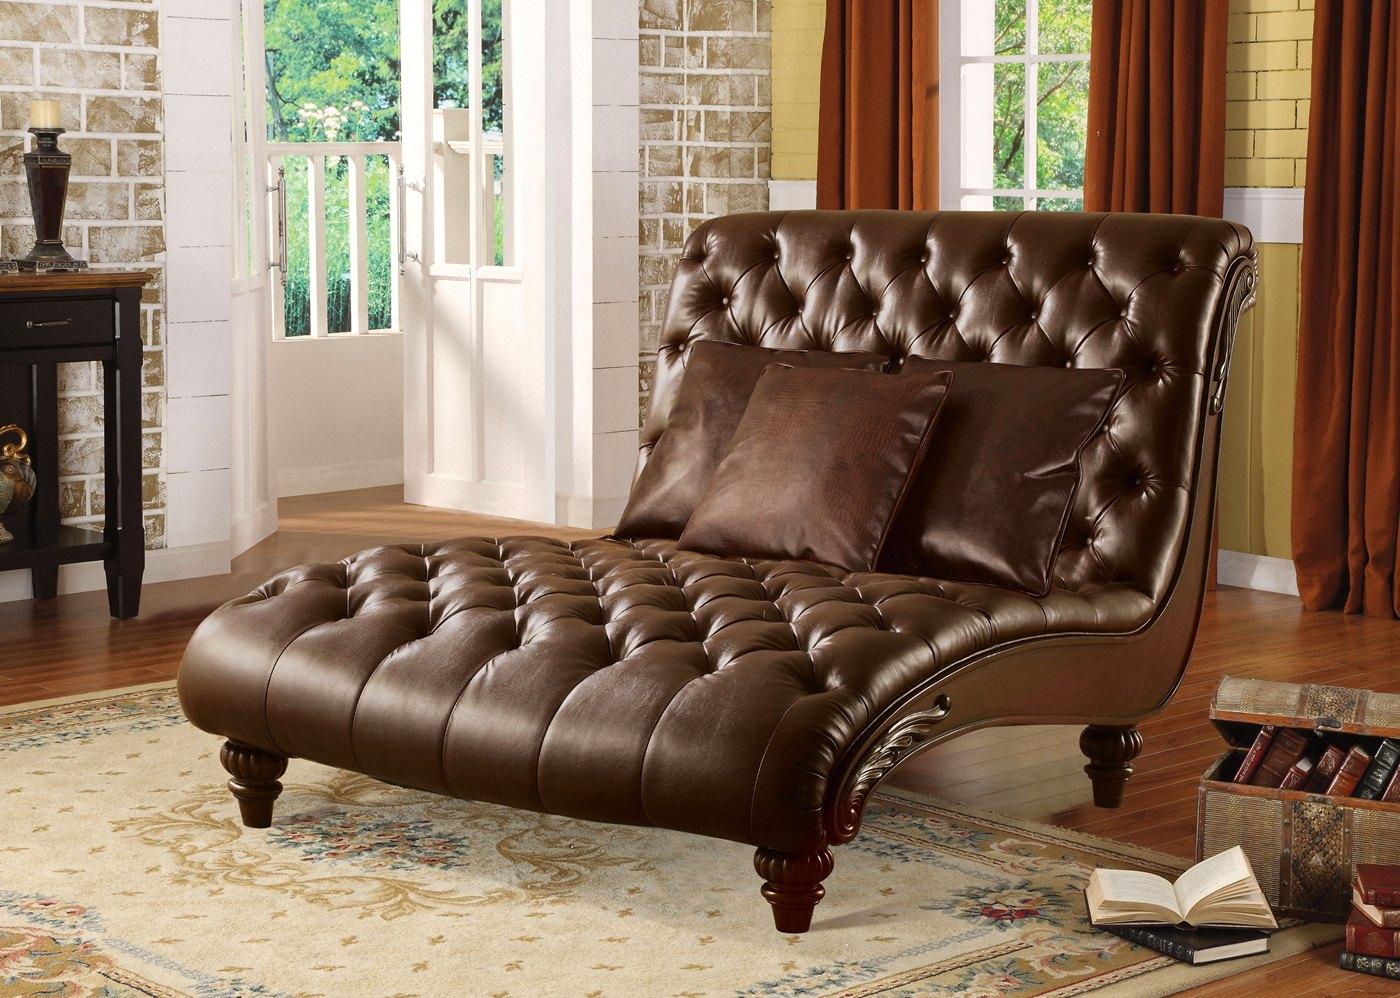 

    
Anondale 15035 Acme Furniture Sofa Chaise
